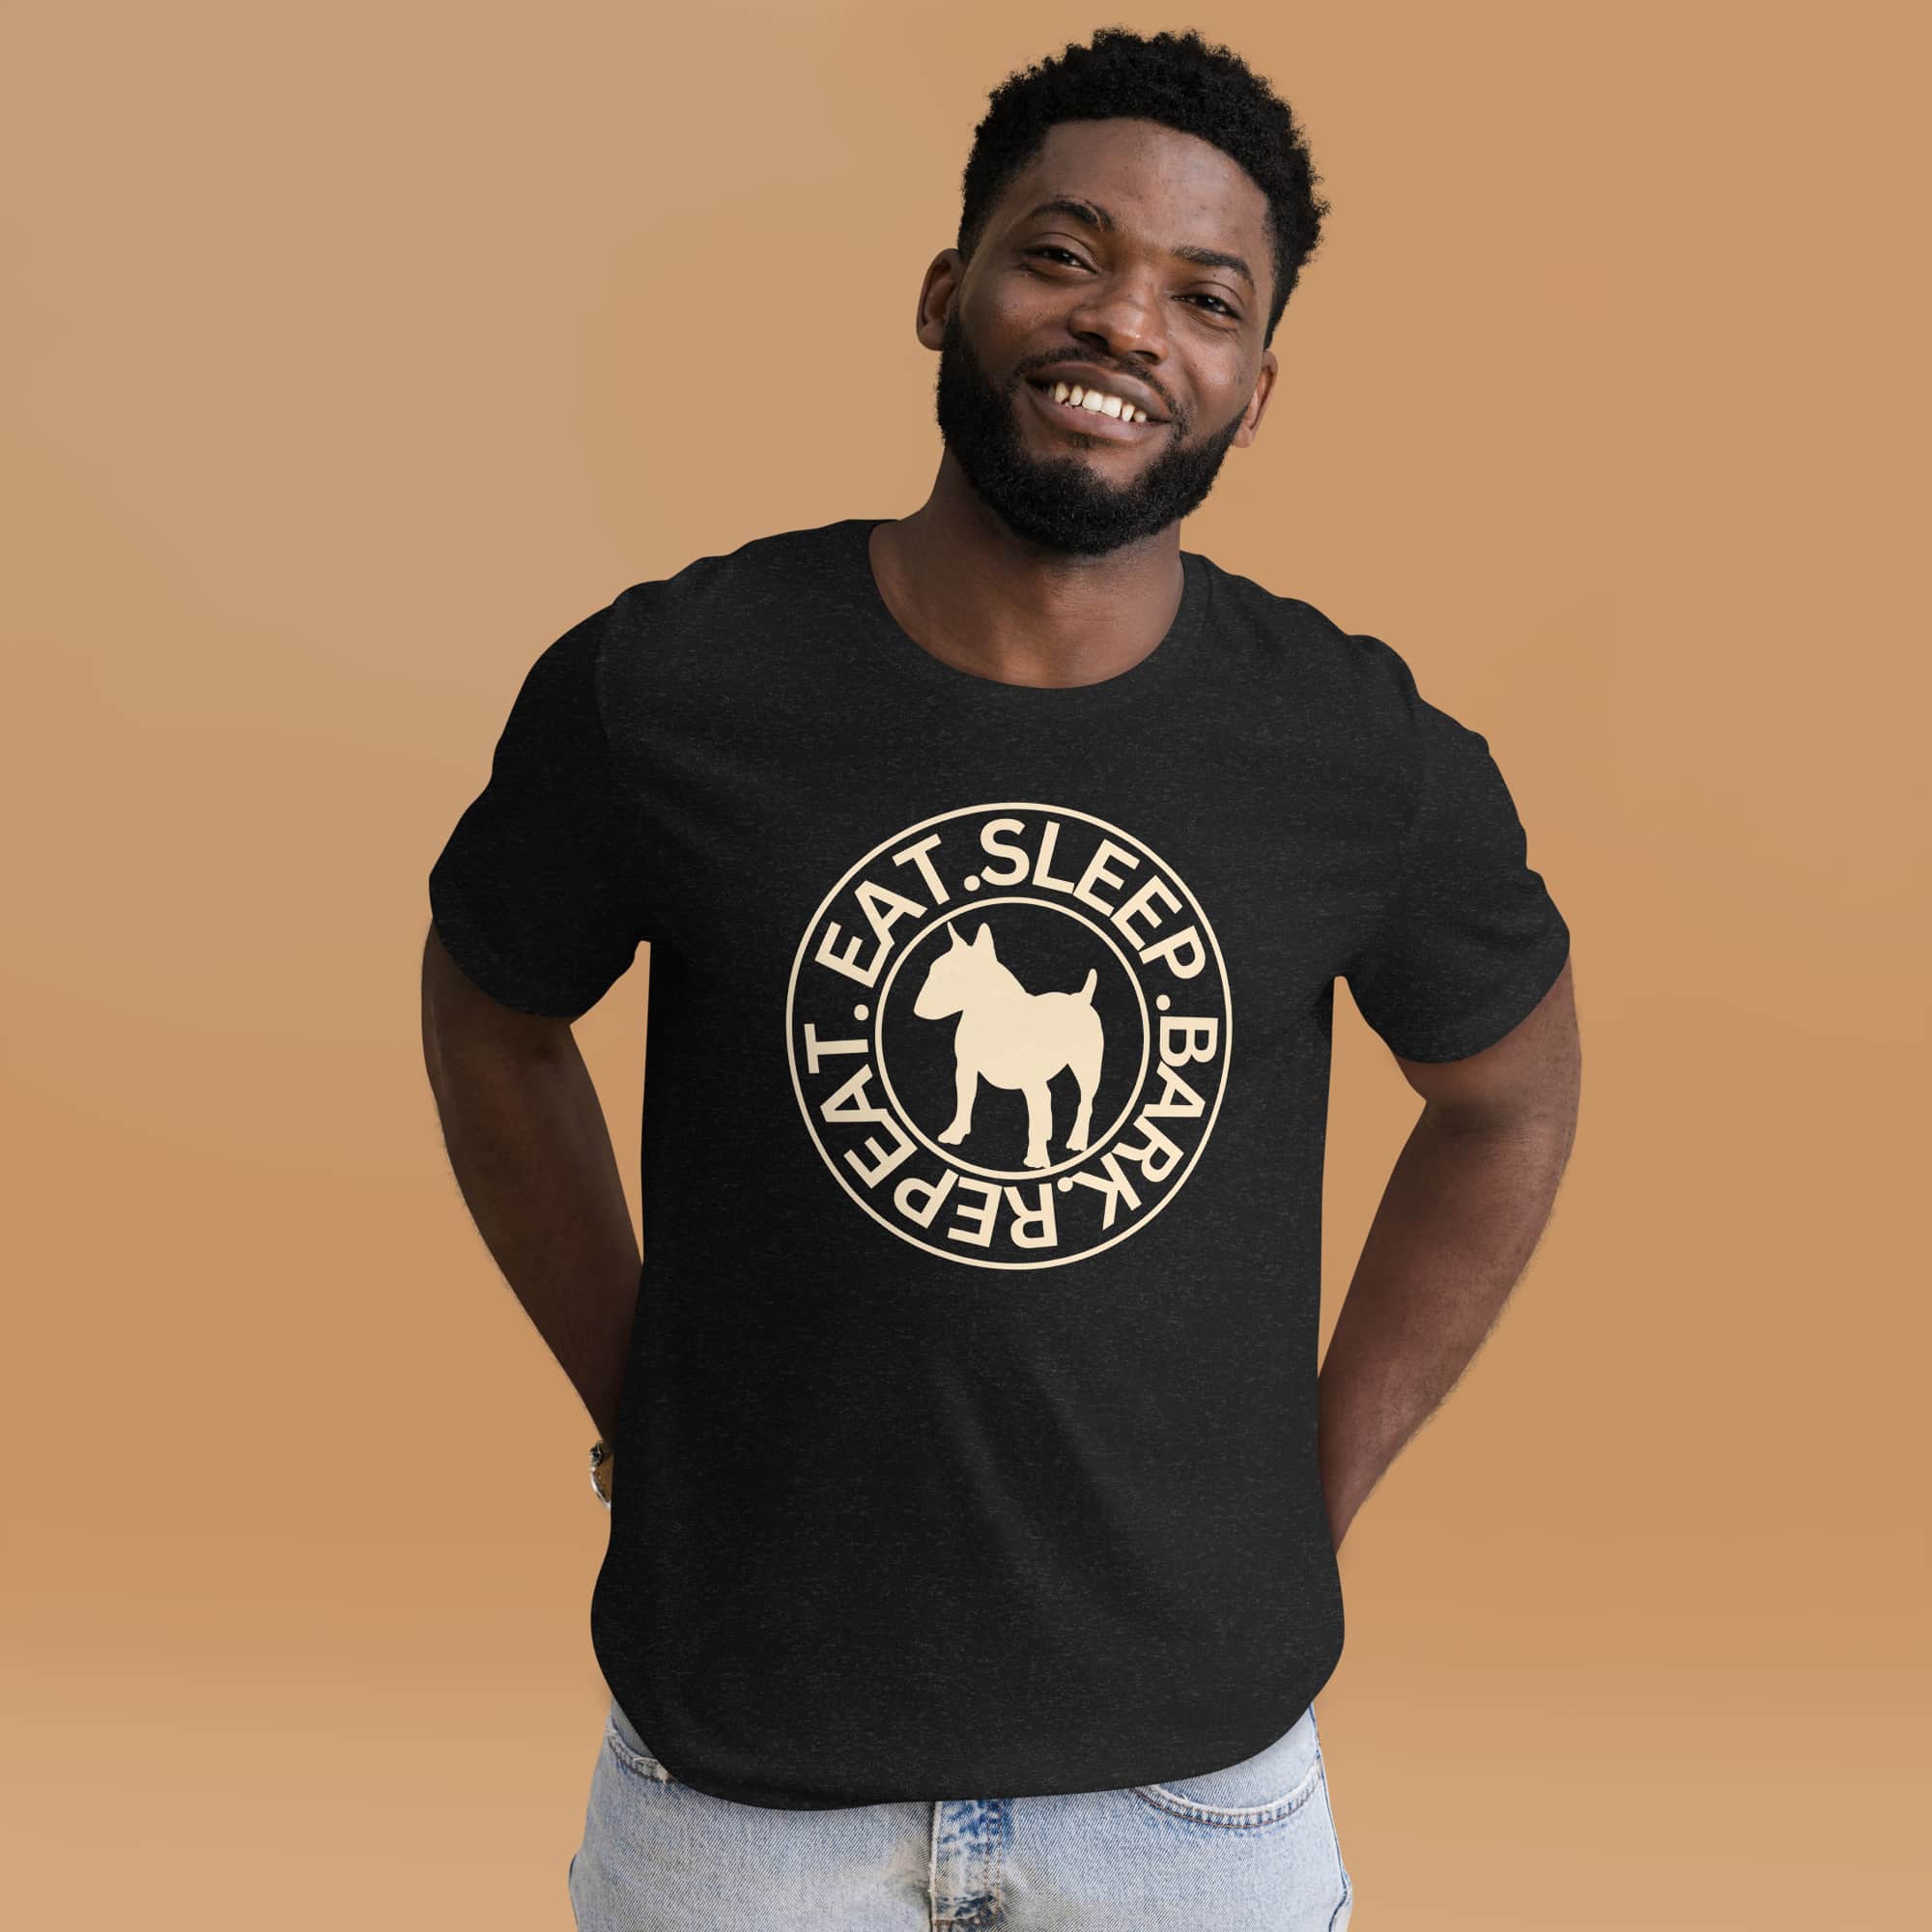 Eat Sleep Bark Repeat Bull Terrier Unisex T-Shirt. Black Heather. Male